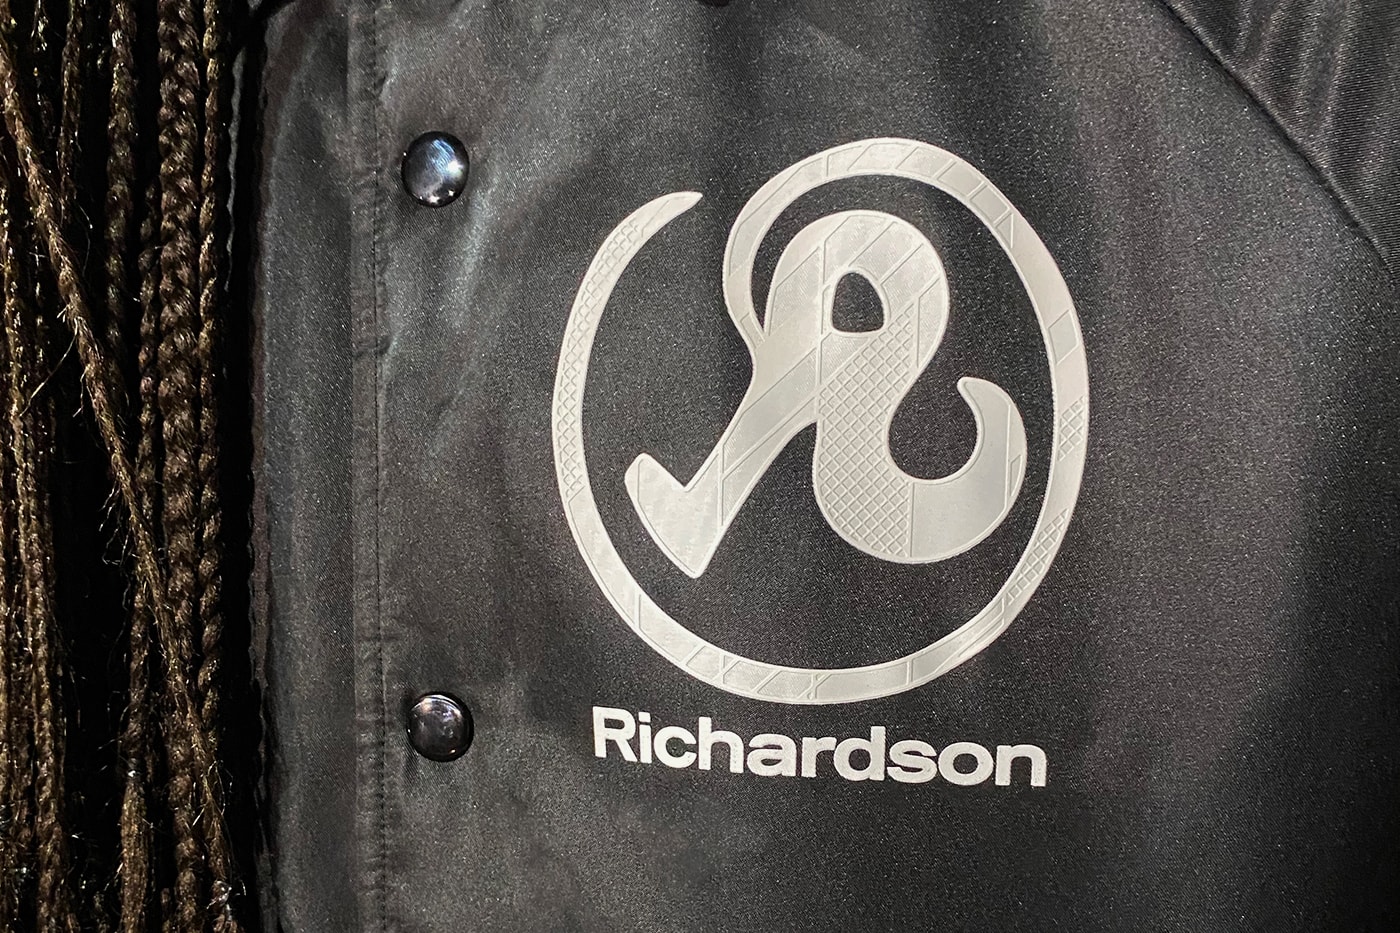 Richardson Fall Winter 2020 Glyph Capsule menswear streetwear lookbooks jackets hoodies tees hats ash tray garments pieces